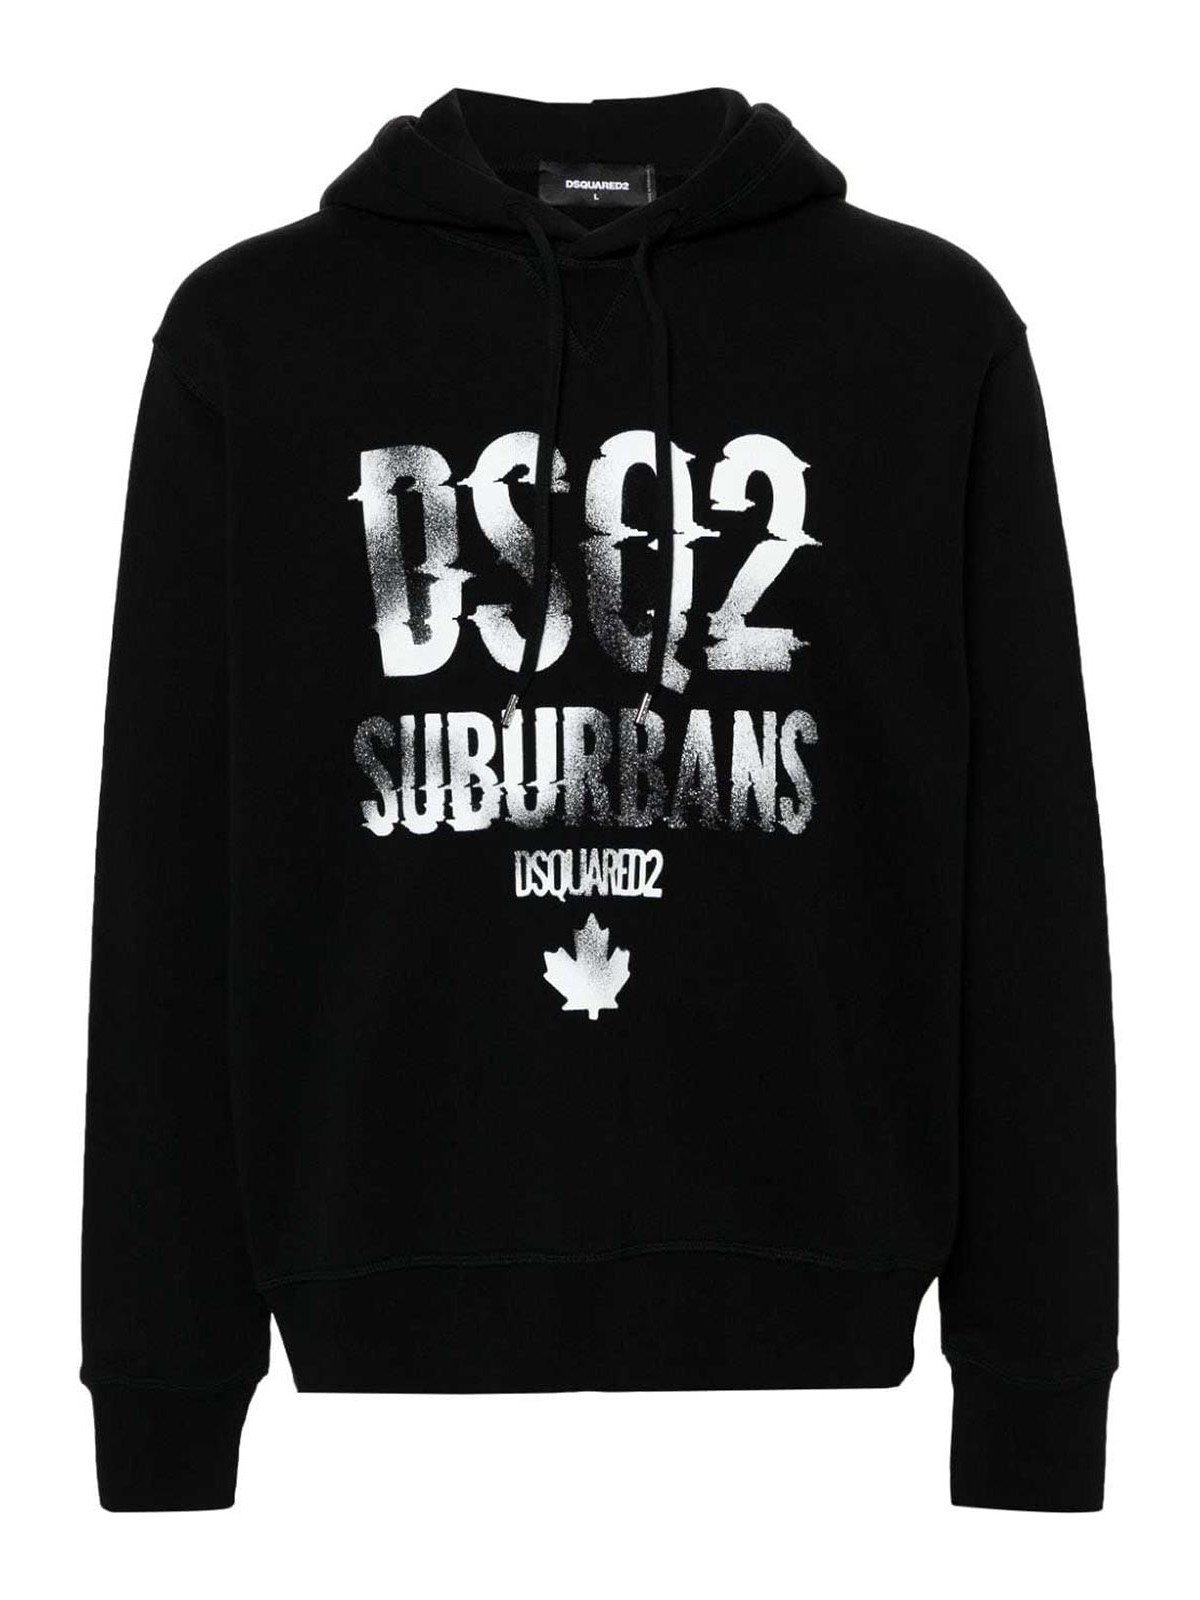 Dsquared2 logo-print cotton hoodie - Black